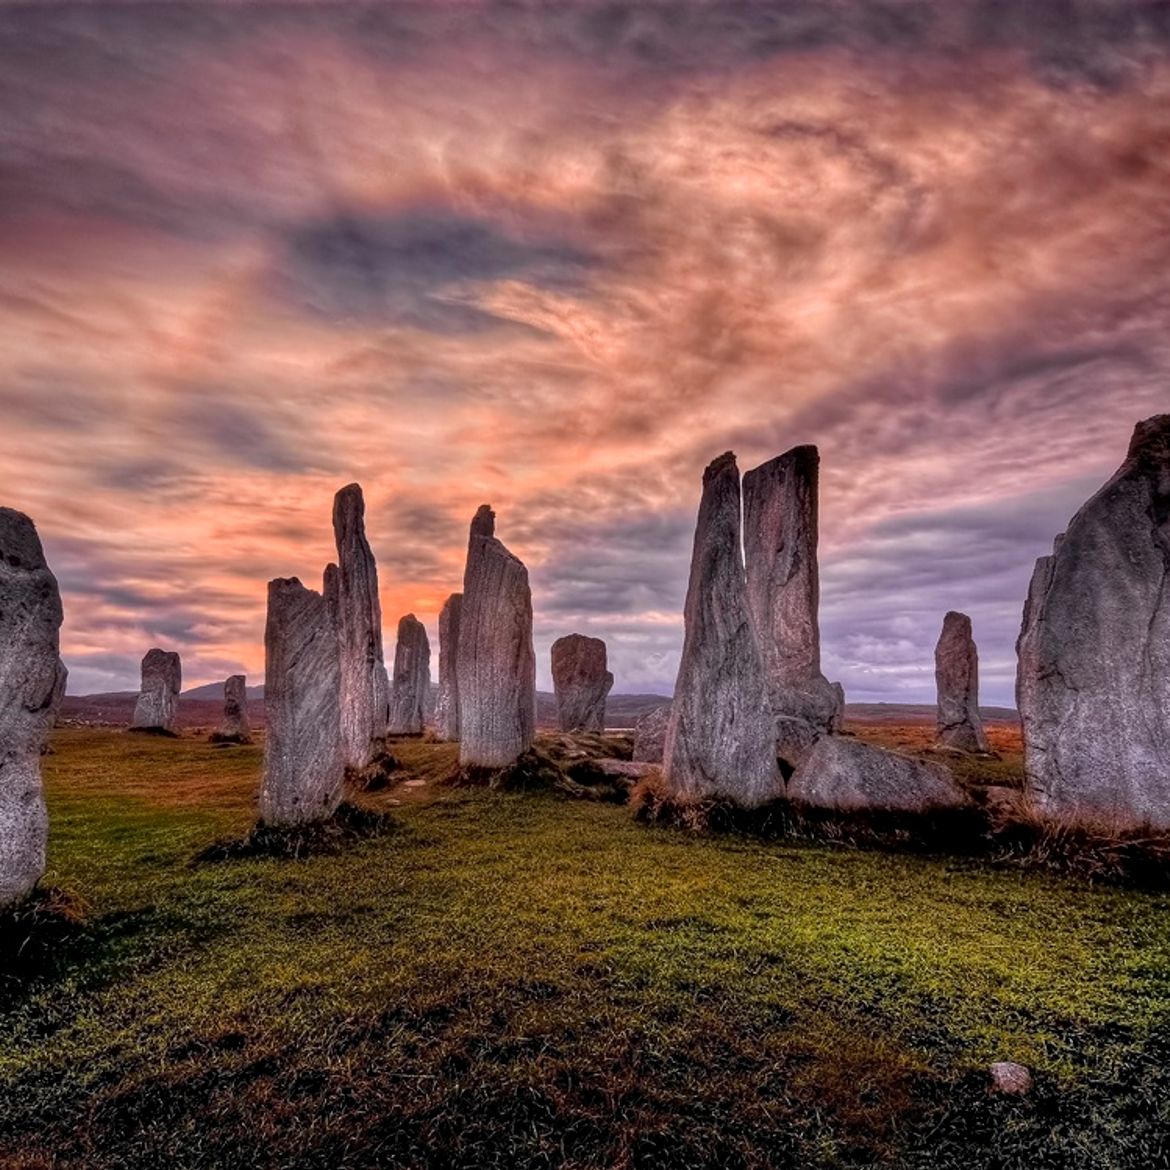 Standing stones. Менгиры Калланиша, Шотландия. Калланиш Шотландия. Шотландия Стоунхендж. Стоячие камни Калланиша, Шотландия.